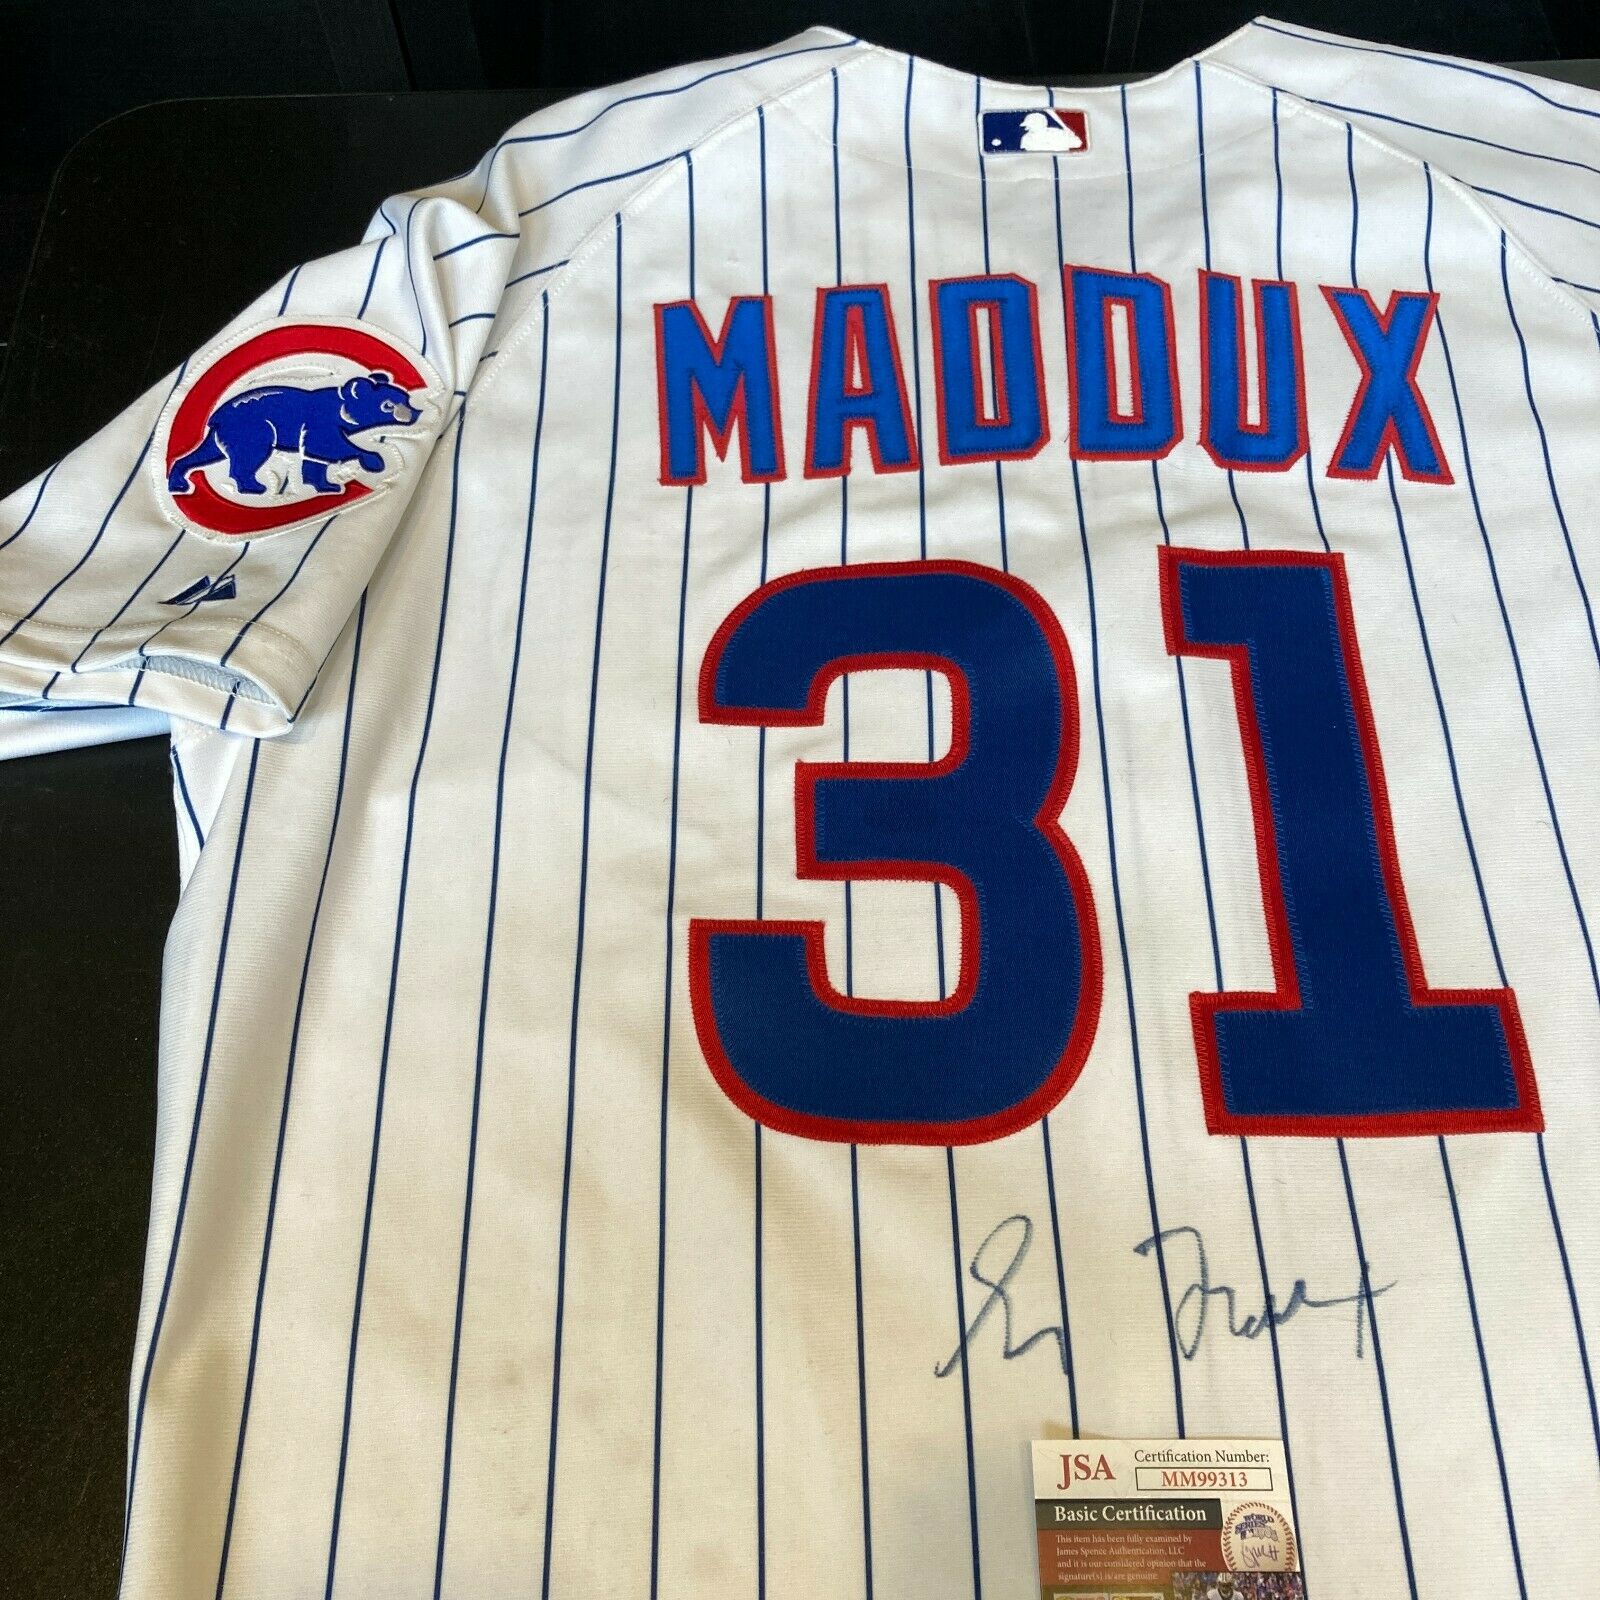 maddux autographed jersey